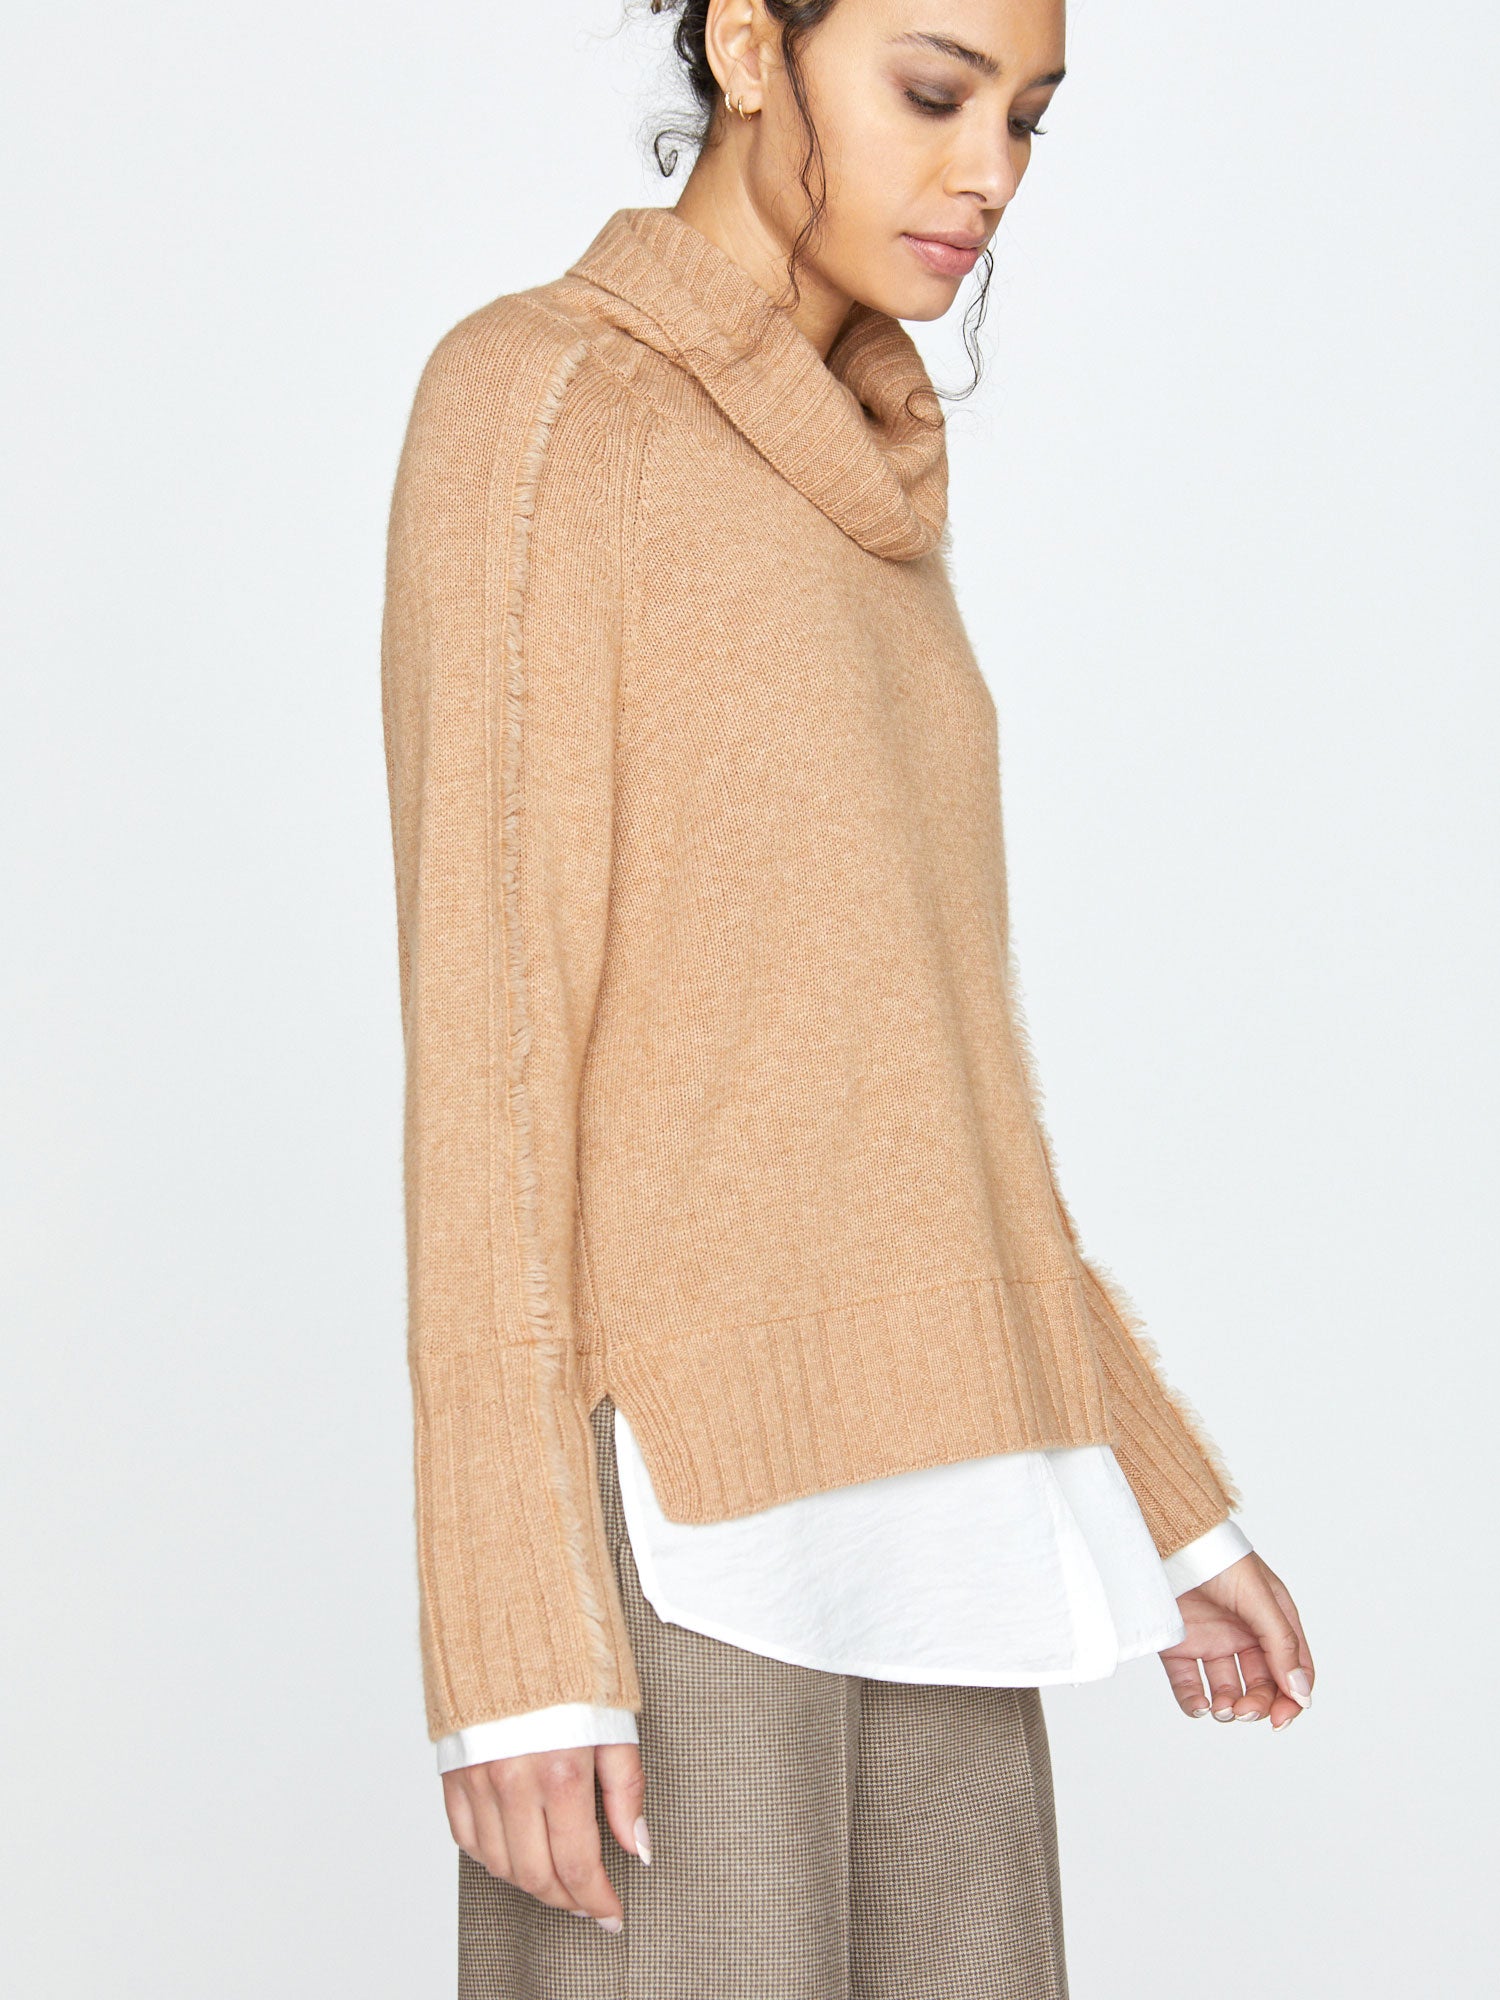 Jolie tan layered turtleneck sweater side view 2